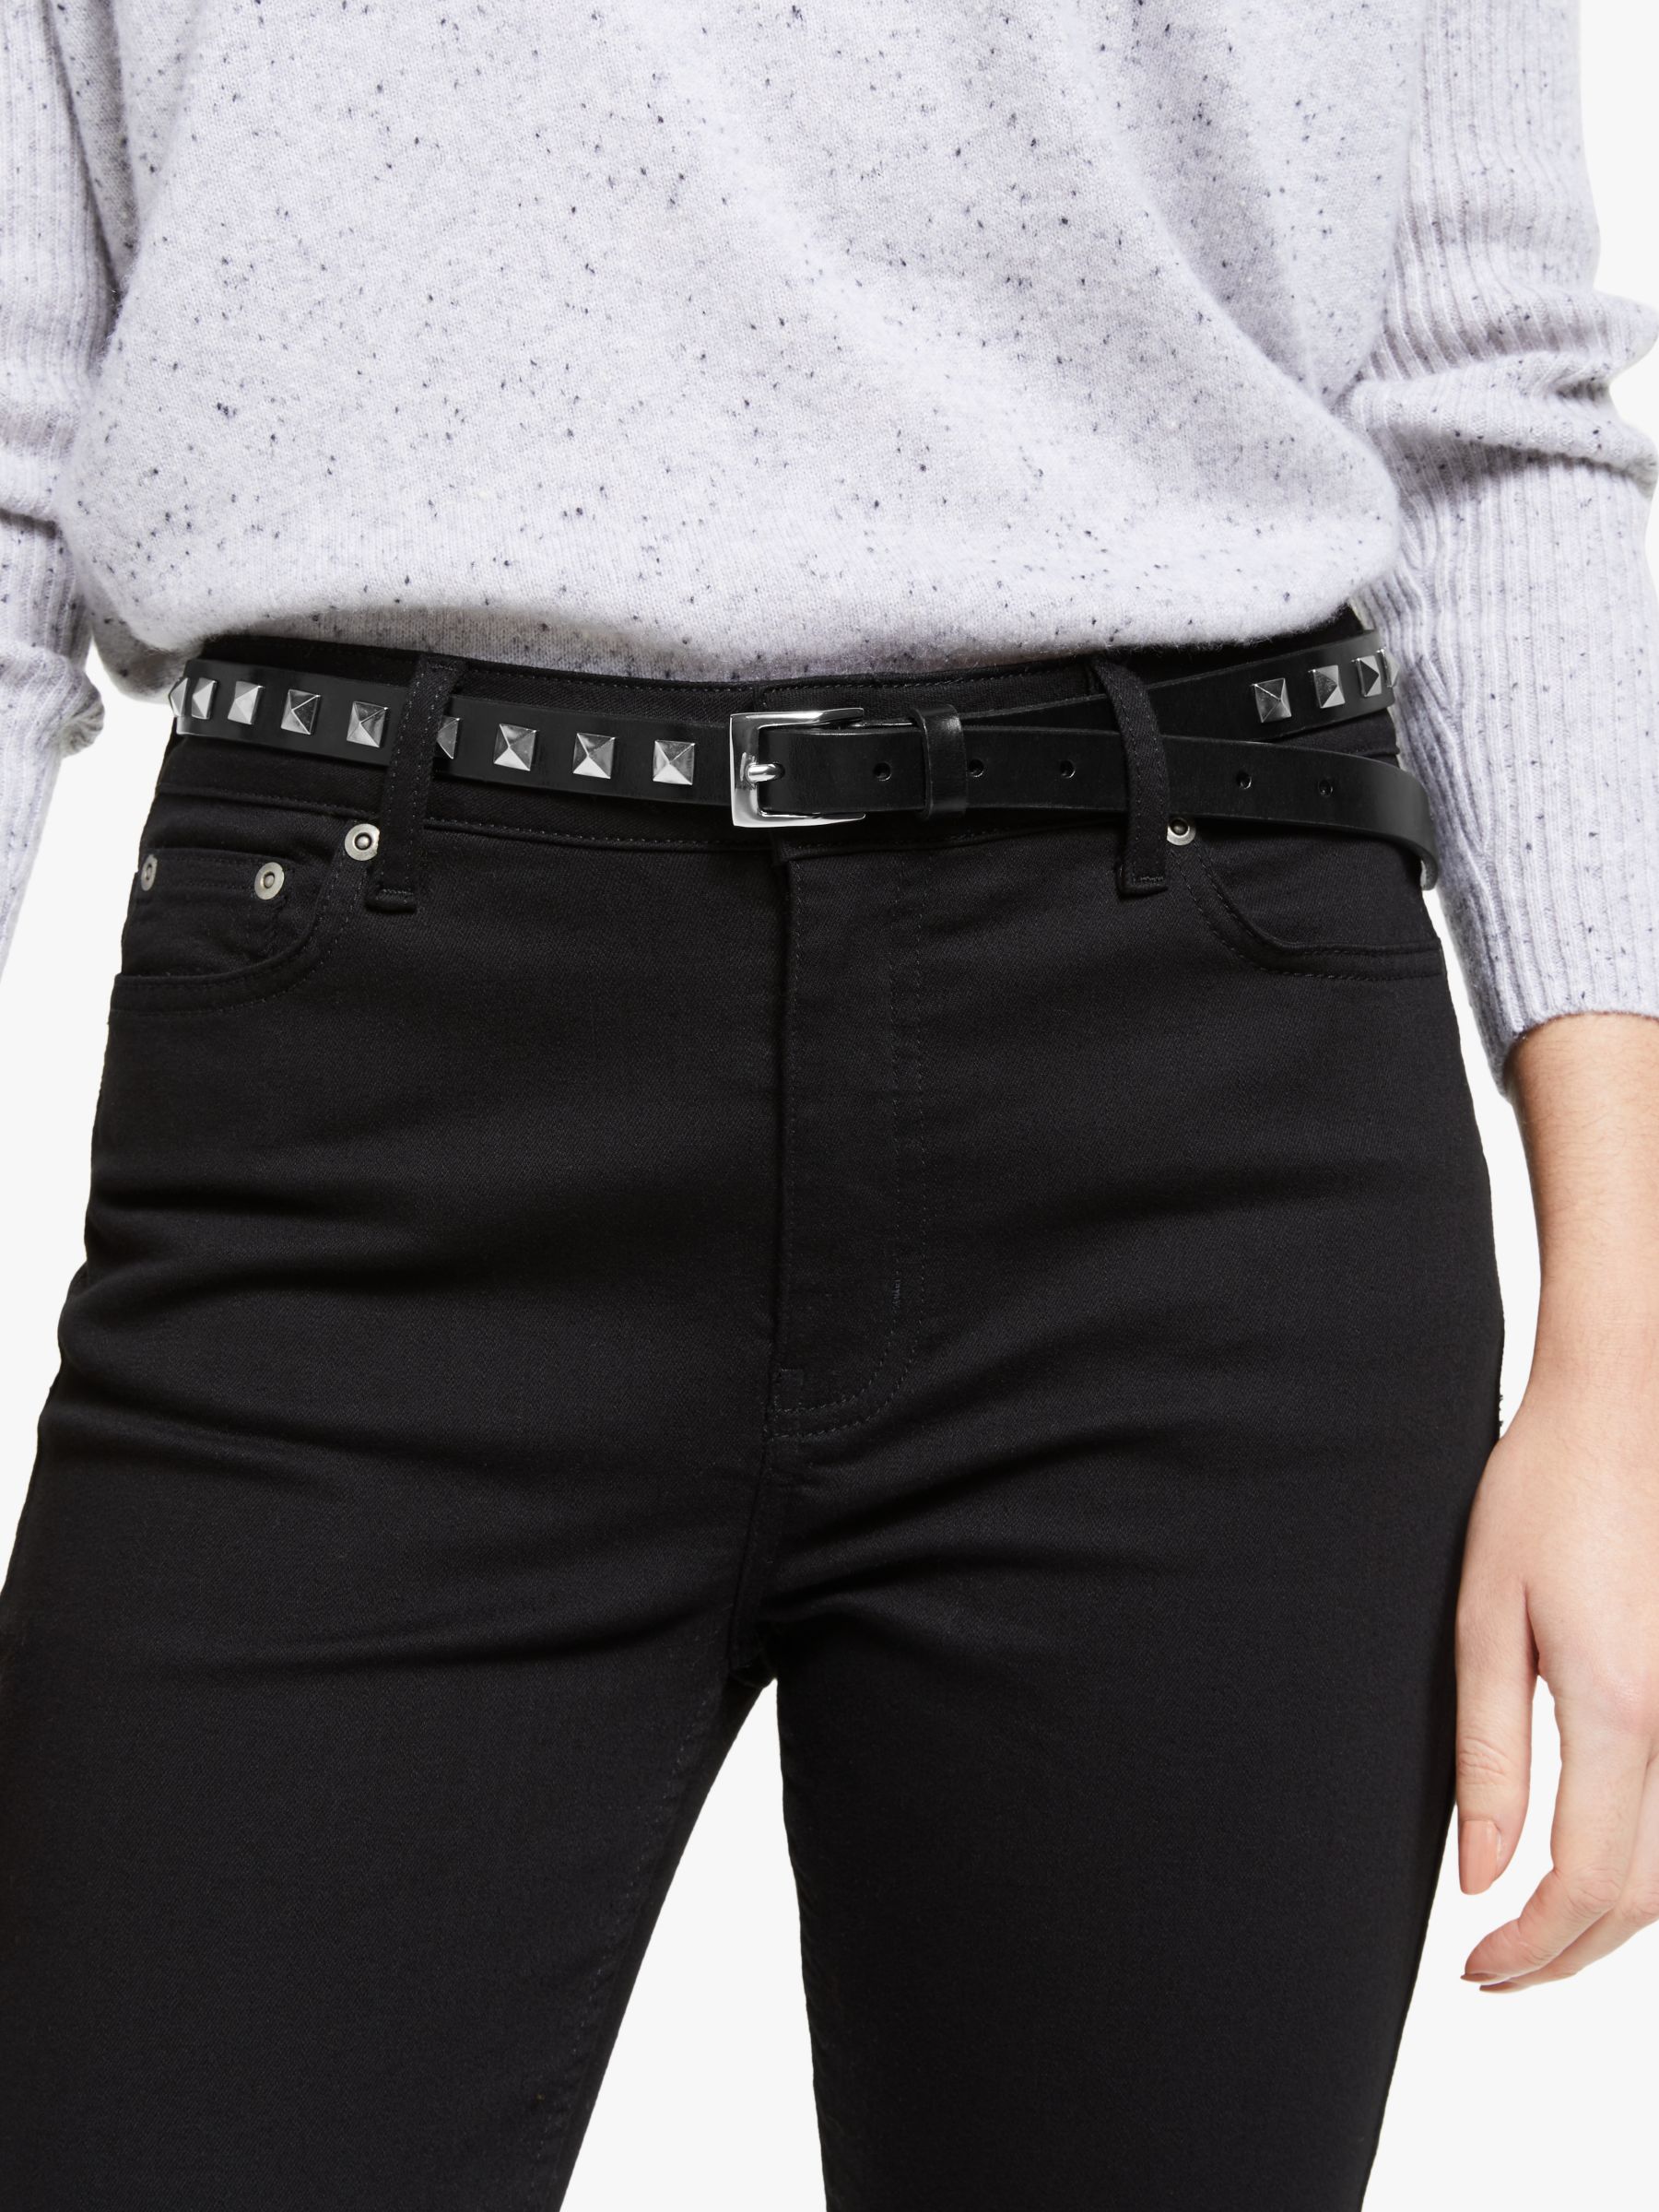 John Lewis & Partners Nicole Studded Leather Jeans Belt, Black